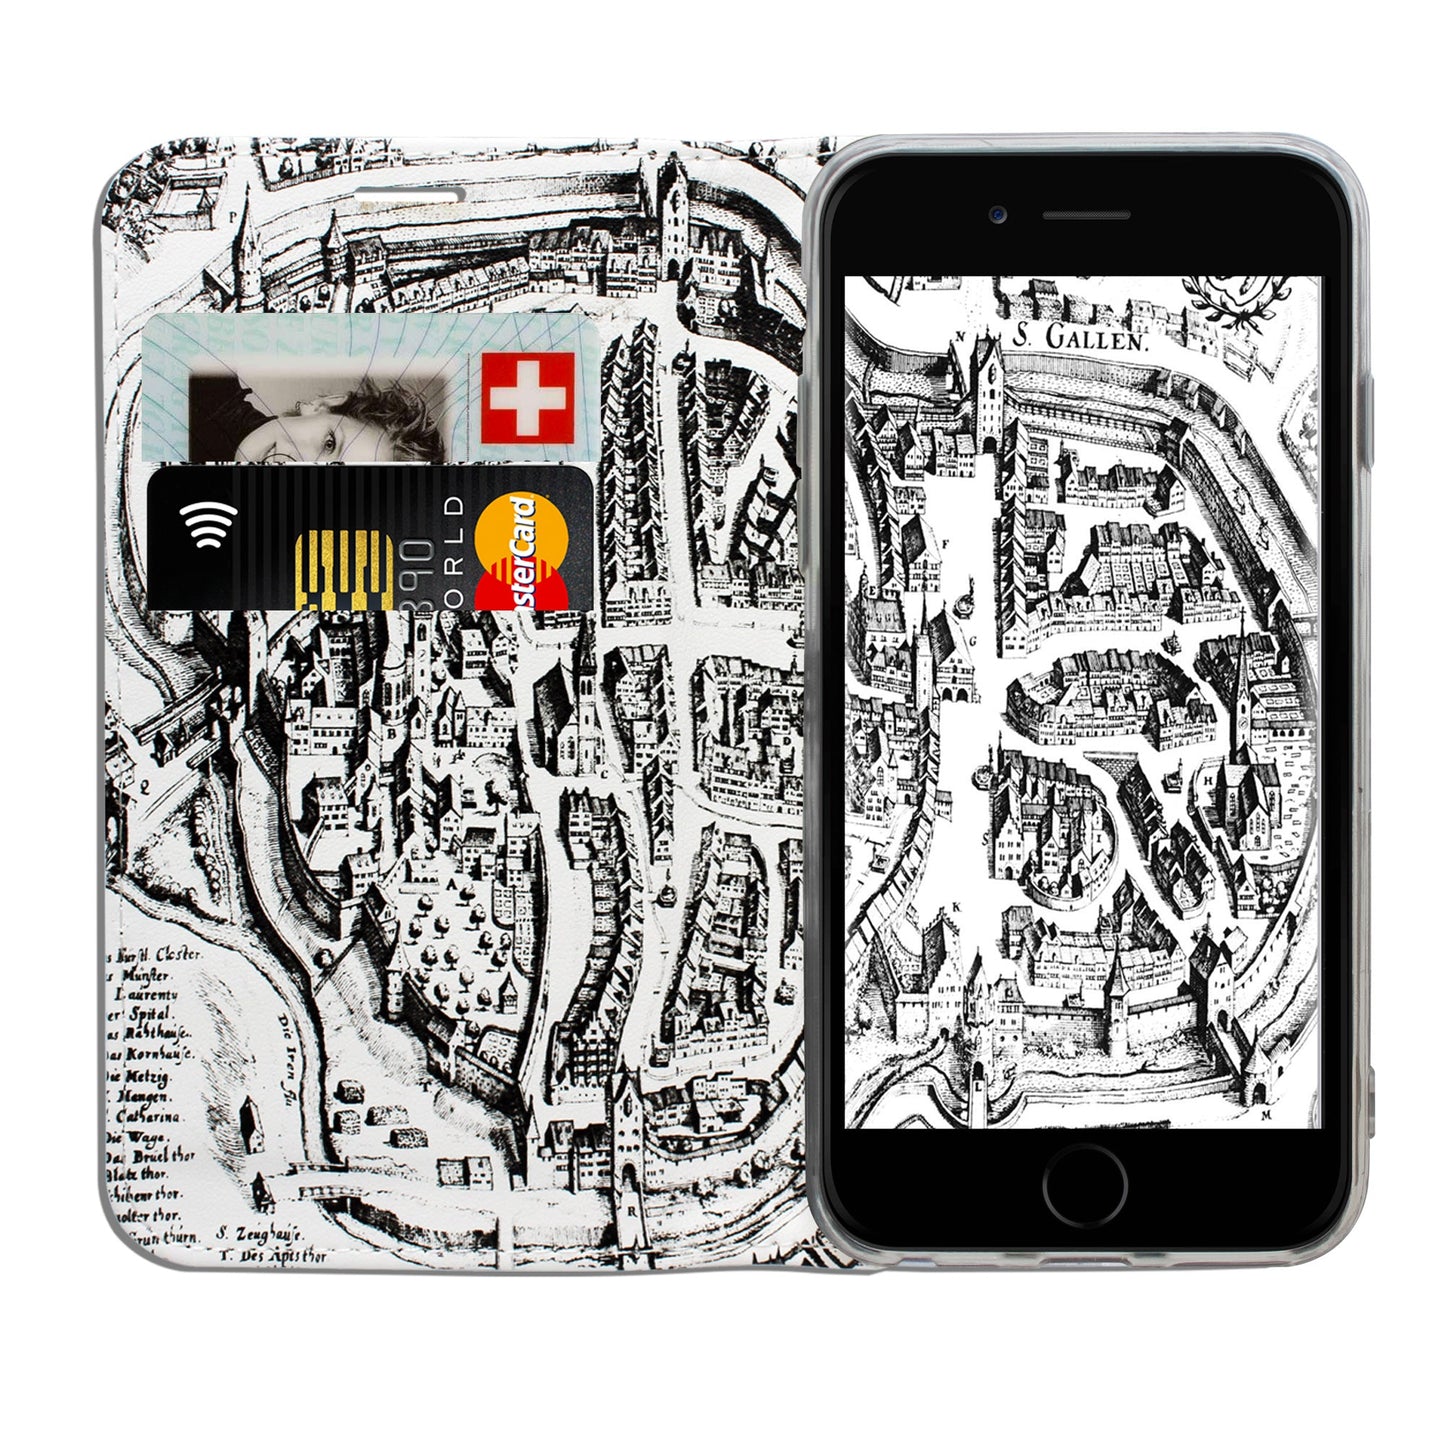 St. Gallen Merian Panorama Case für iPhone 6/6S/7/8 Plus